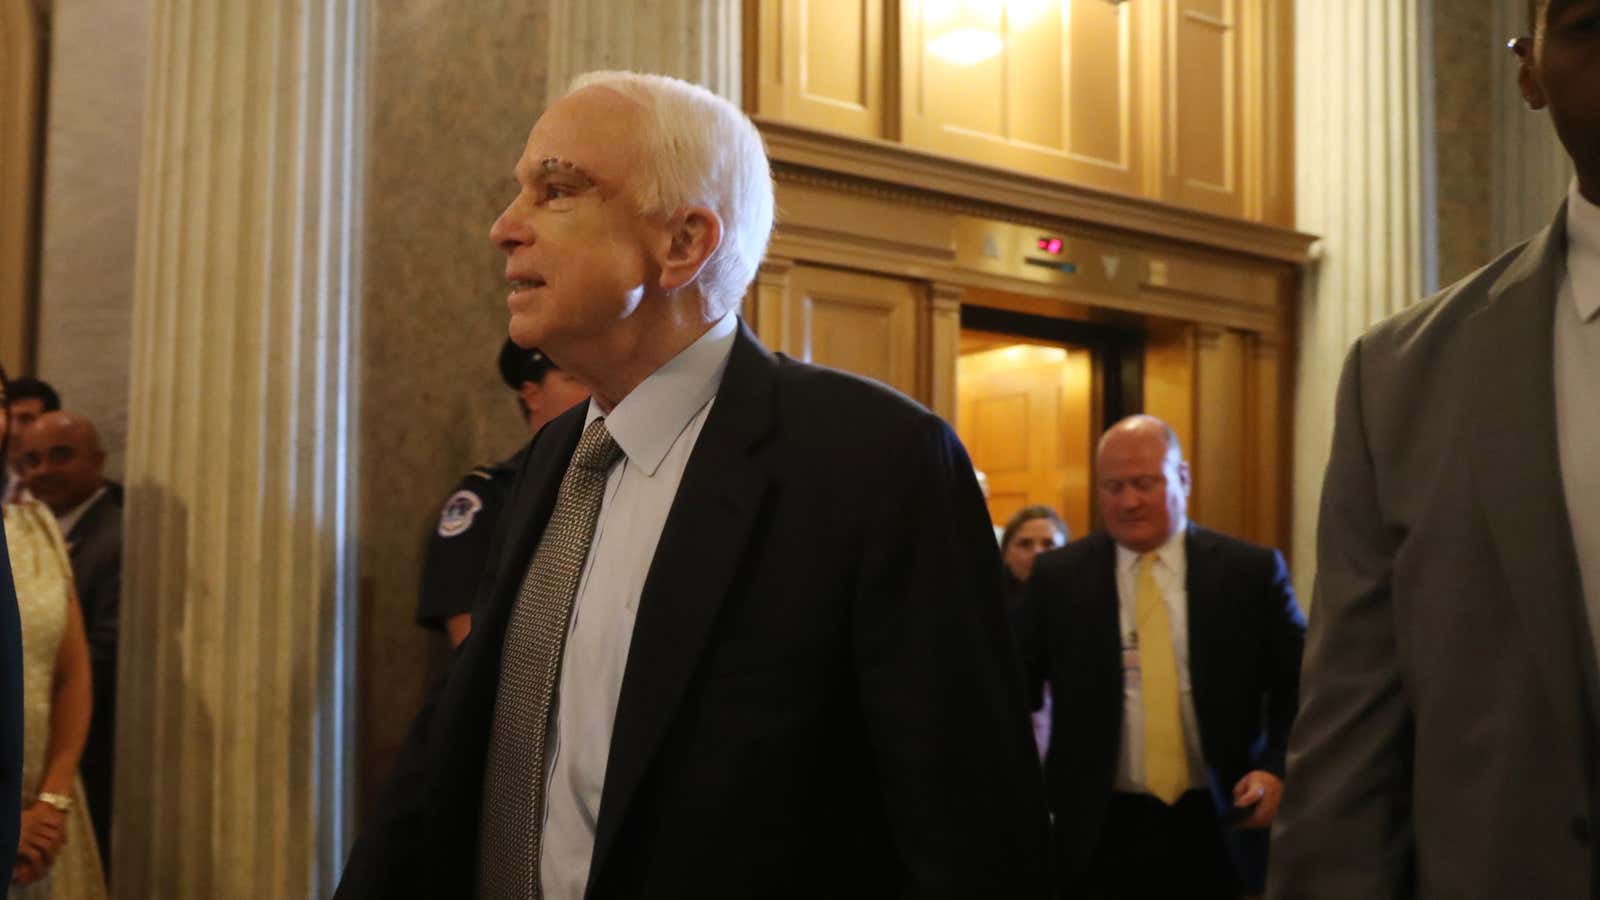 McCain arrives in the Senate.